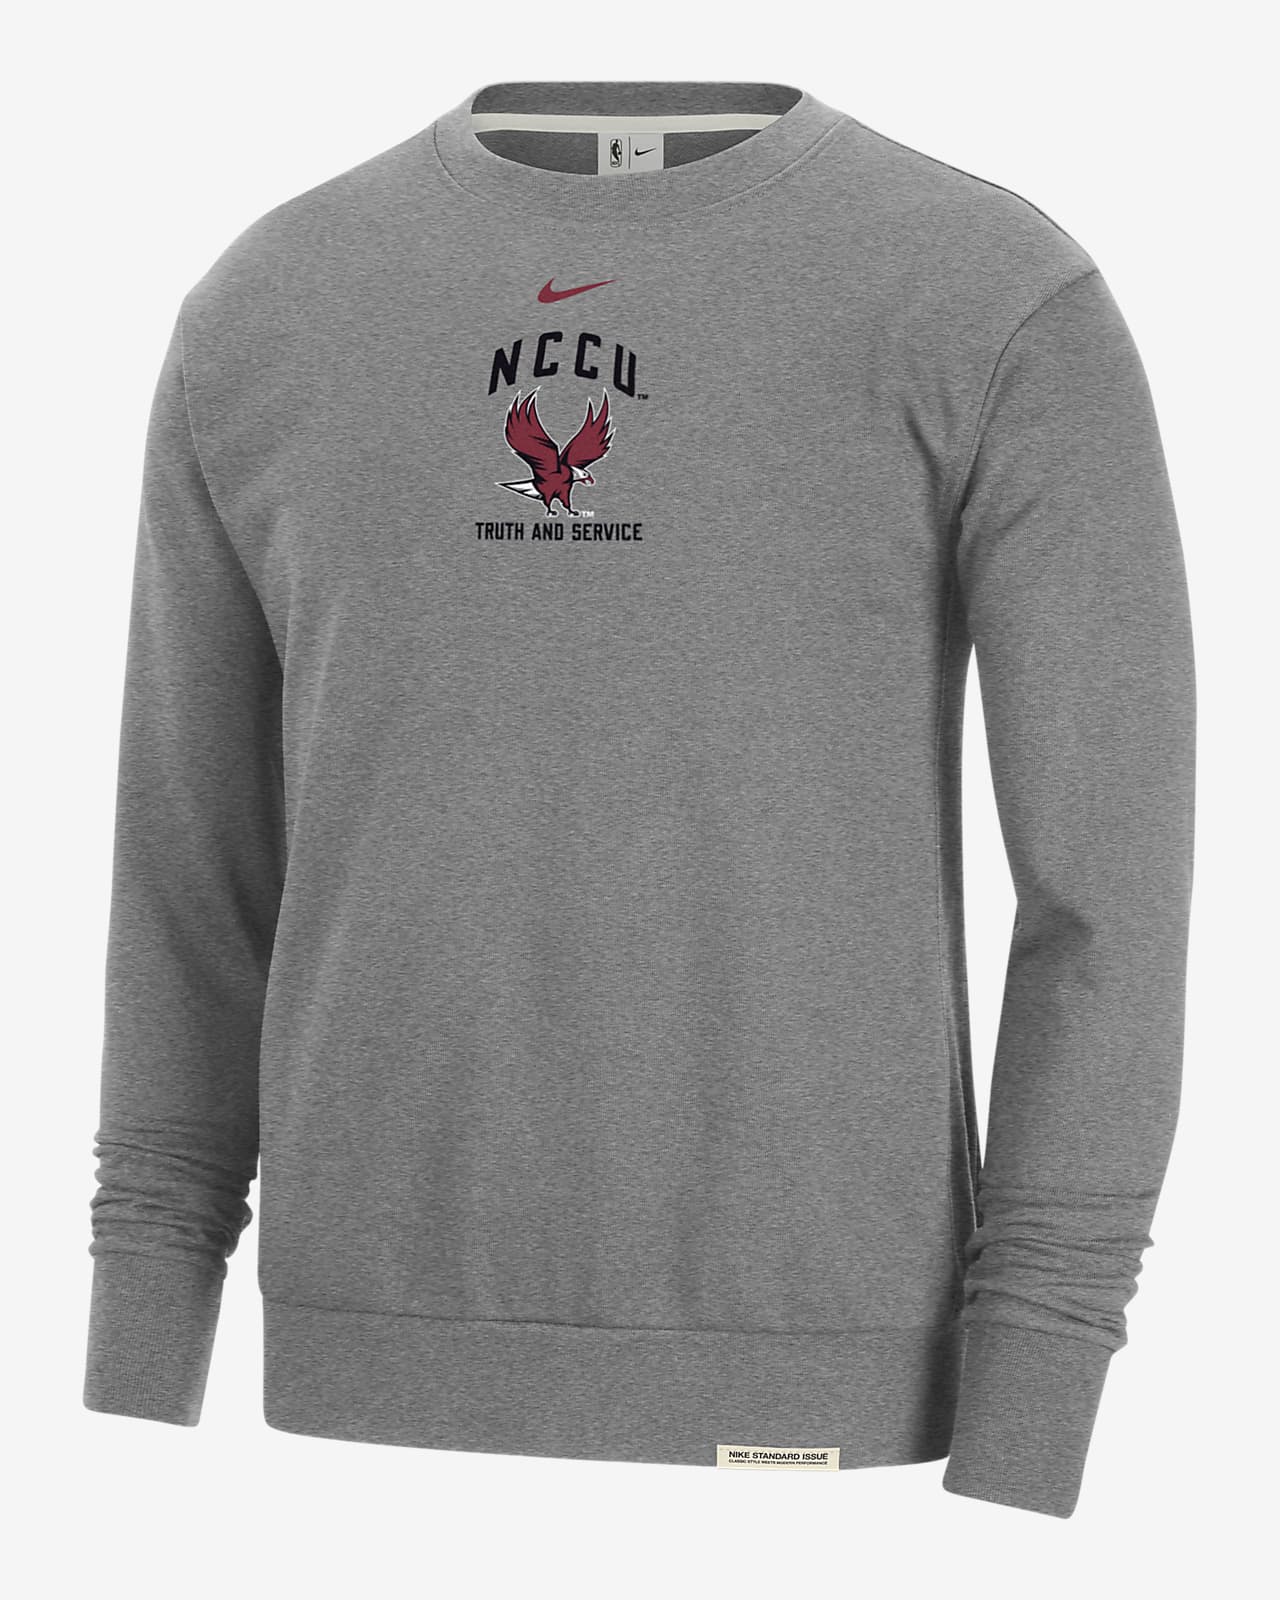 North Carolina Central Standard Issue Men's Nike College Fleece Crew-Neck Sweatshirt